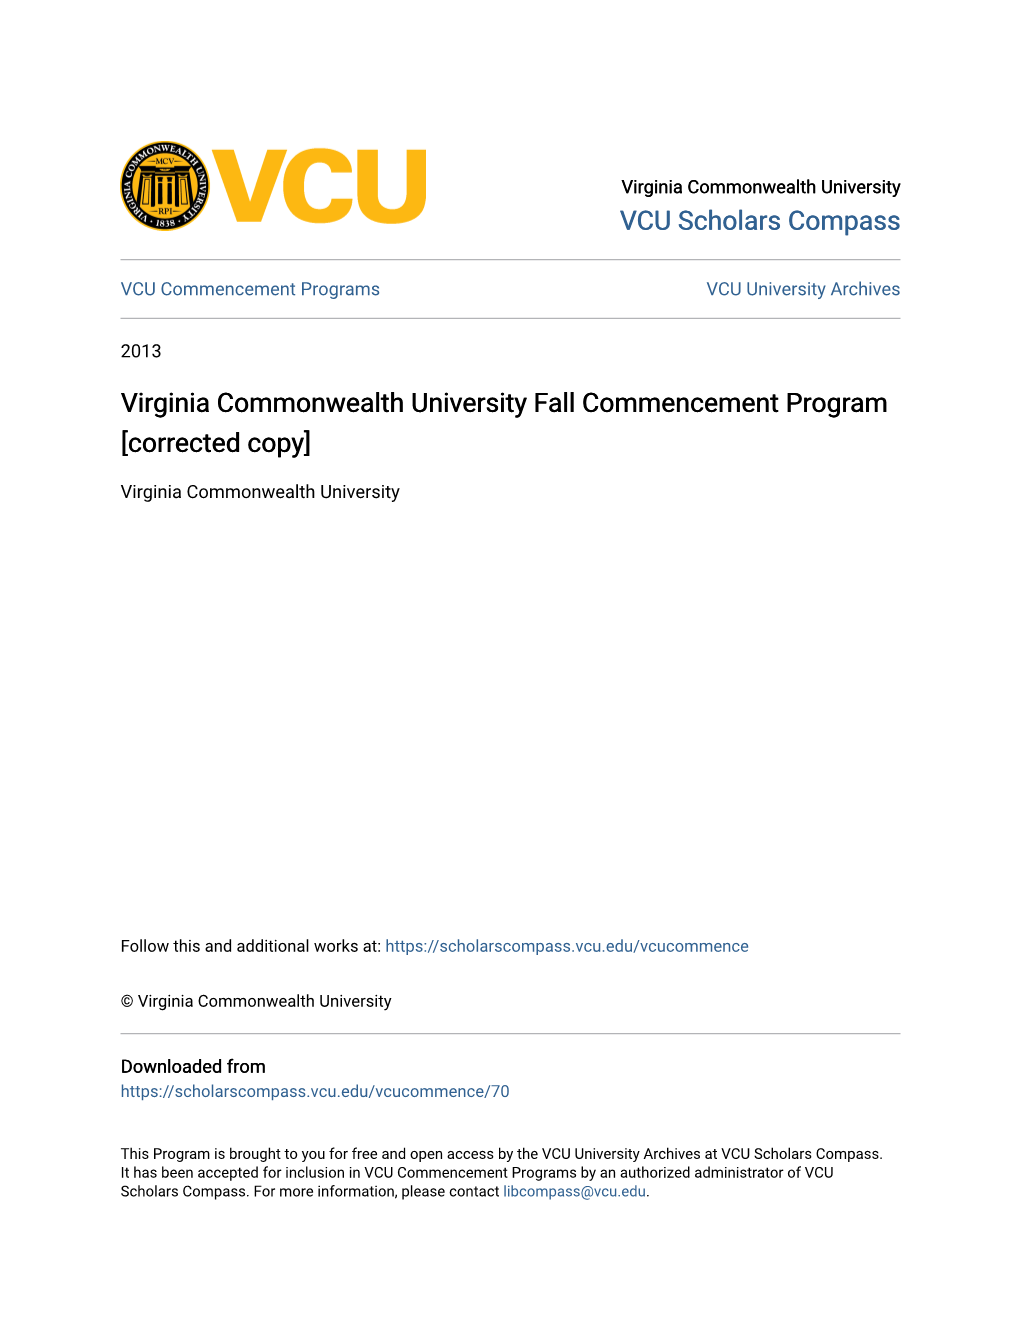 Virginia Commonwealth University Fall Commencement Program [Corrected Copy]